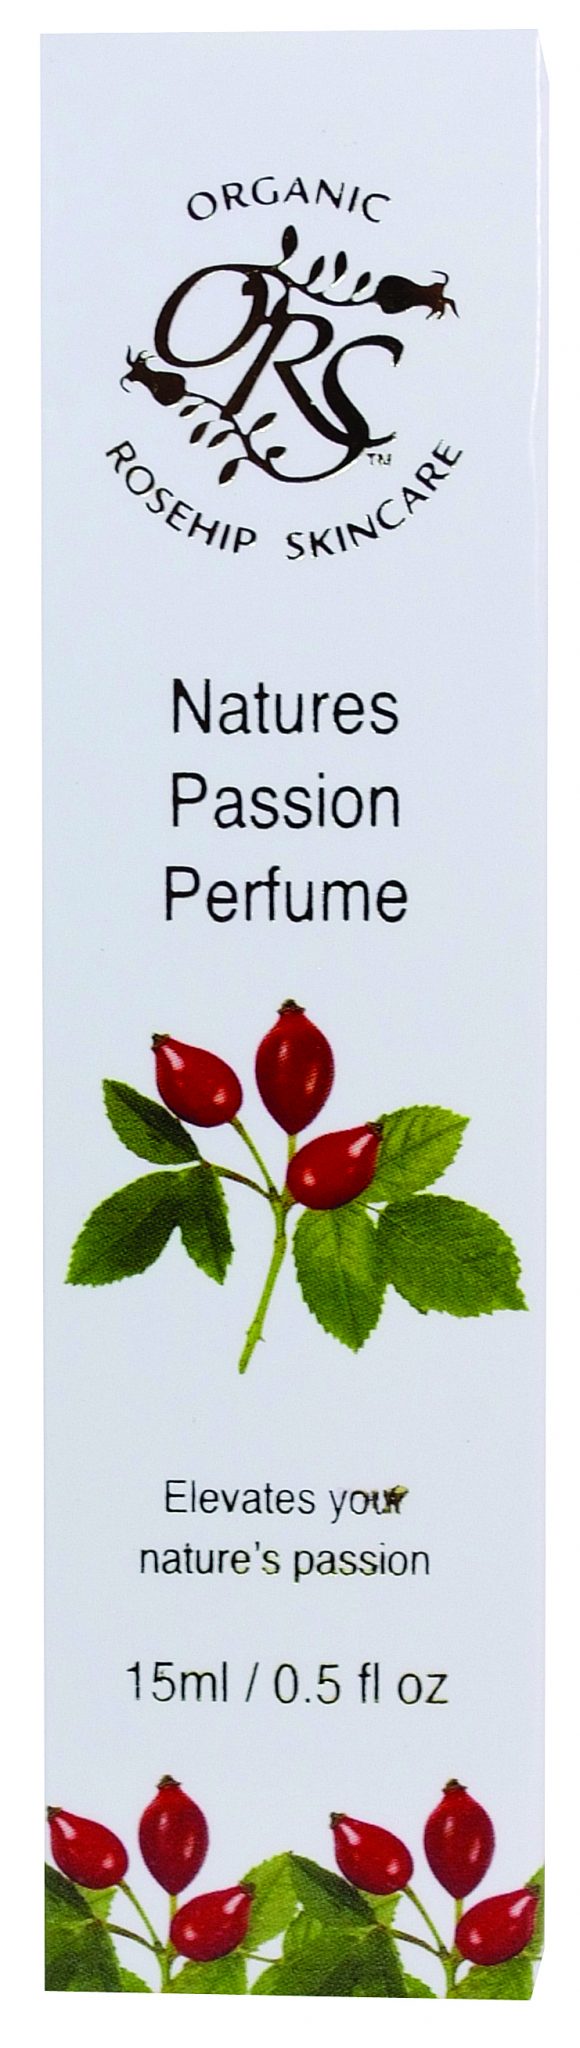 Natures Passion Perfume Box 15ml